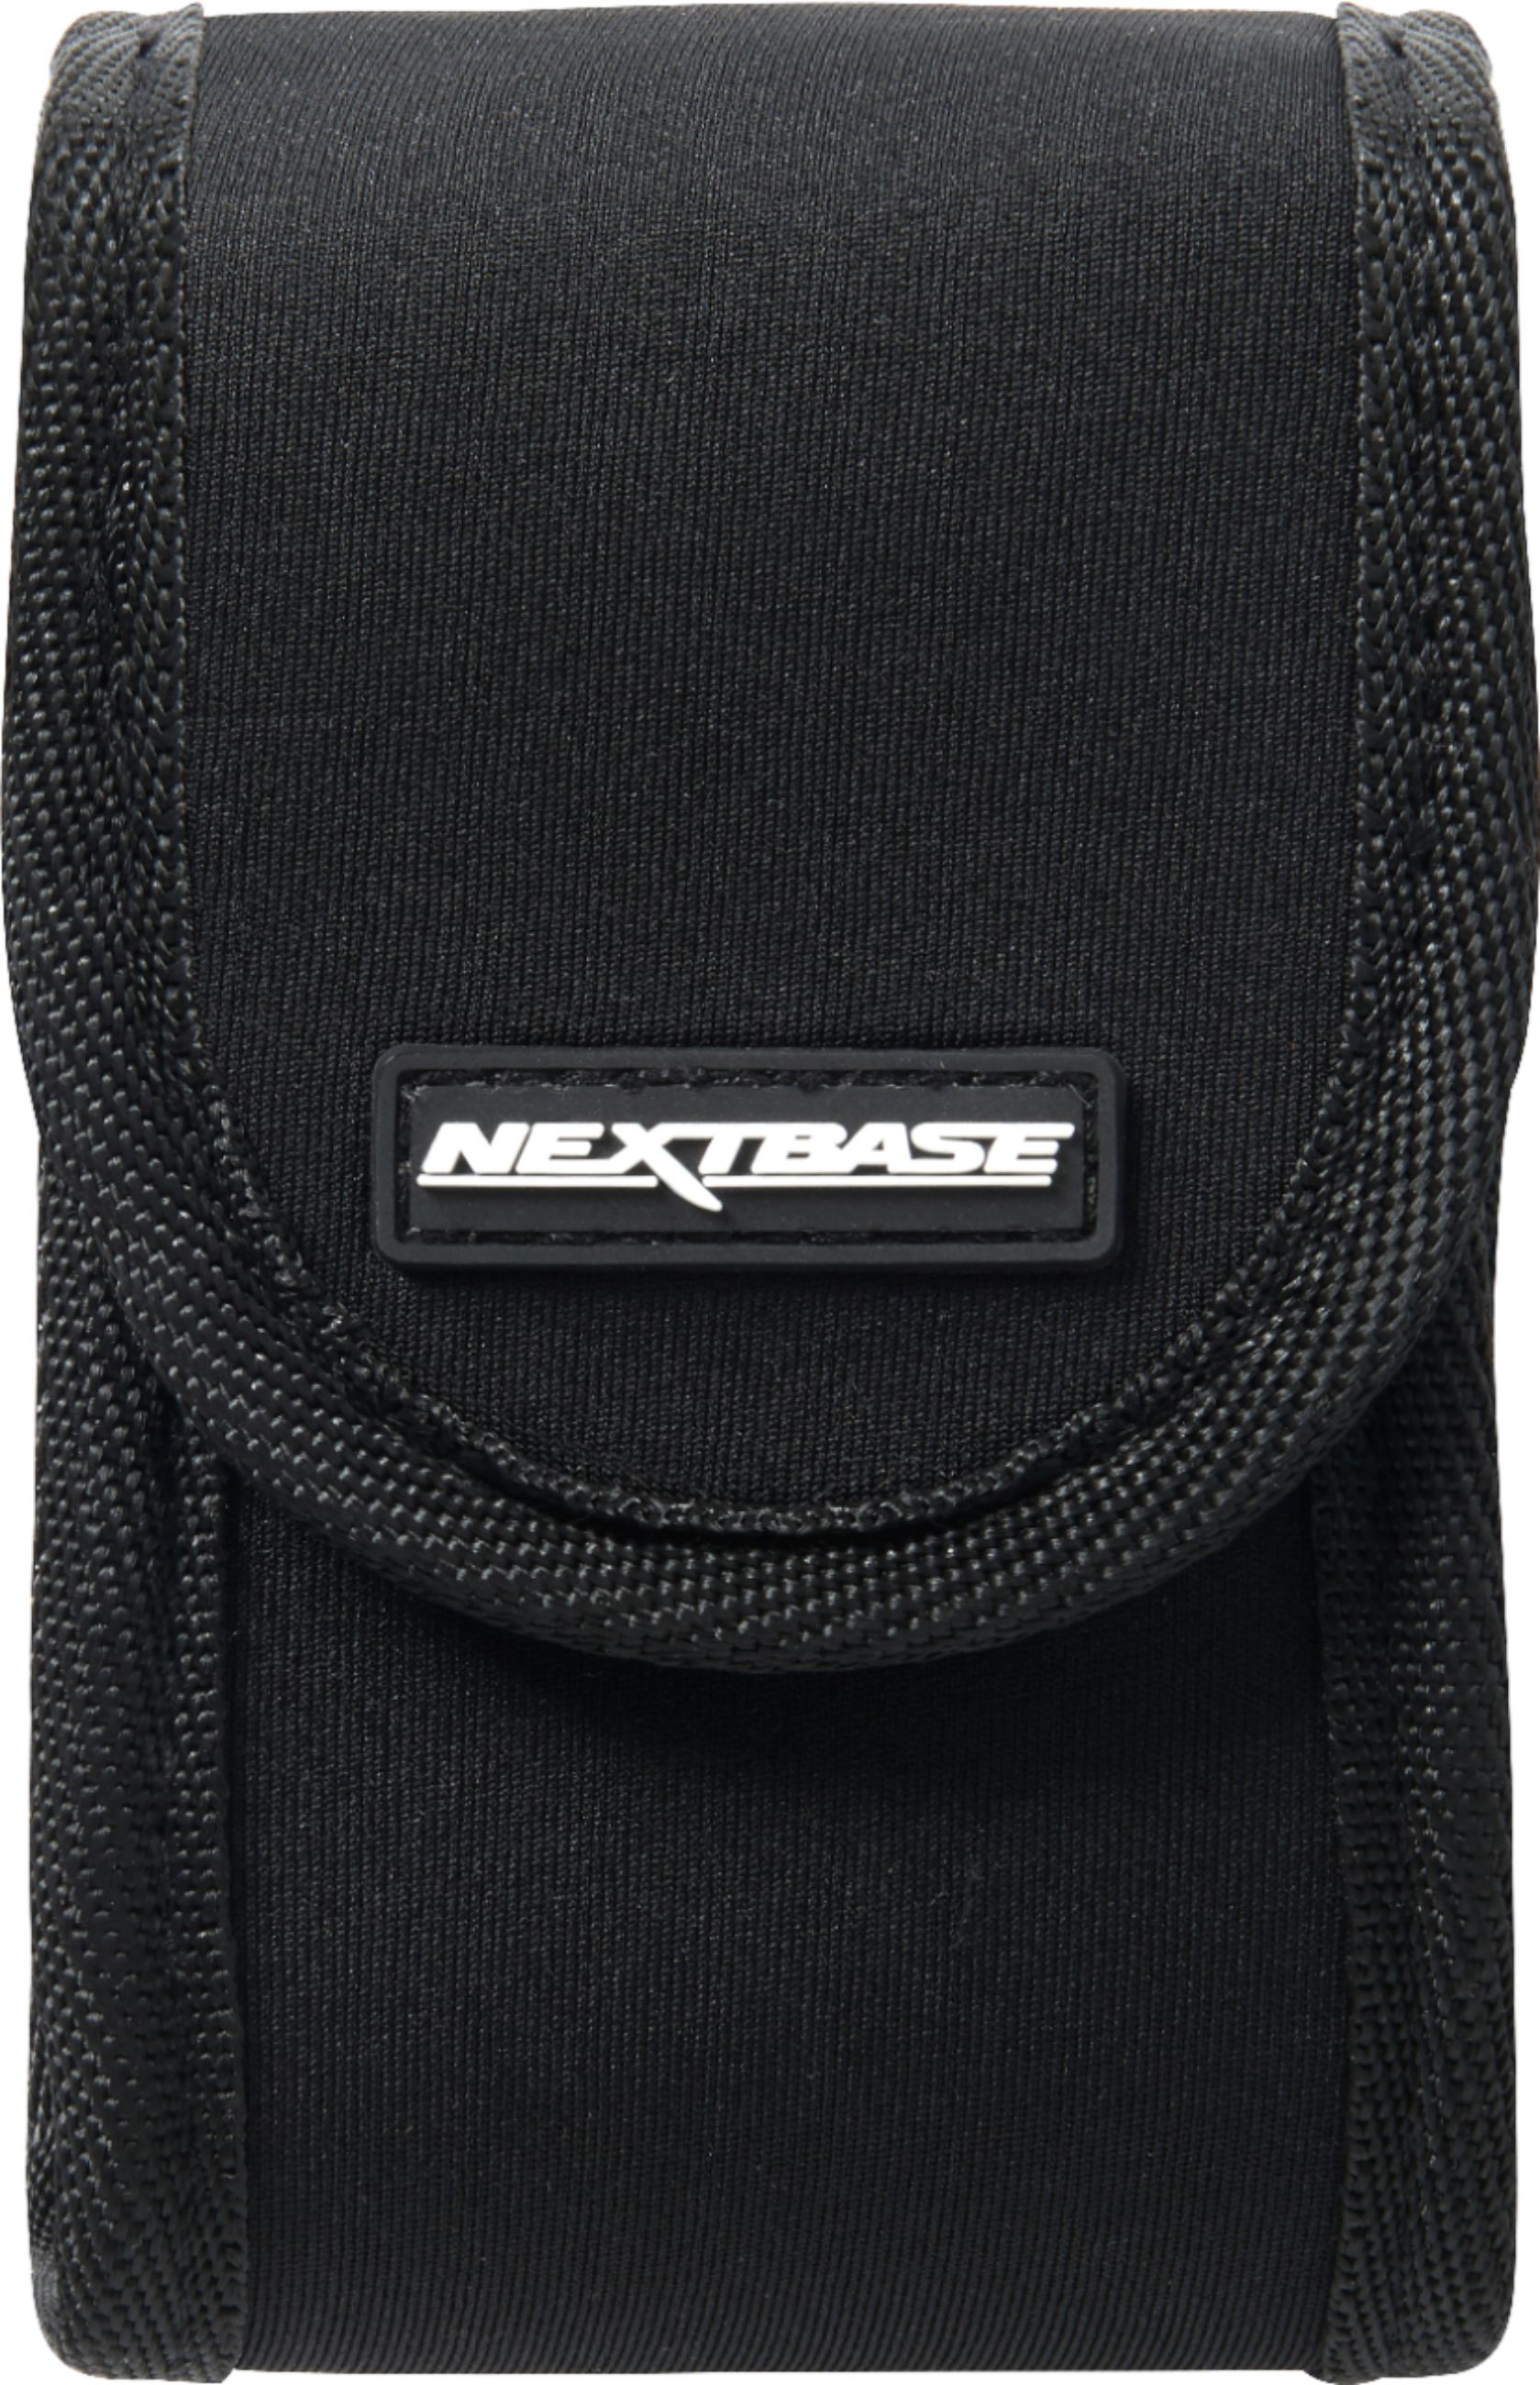 Angle View: Nextbase - Camera Protective Case - Black